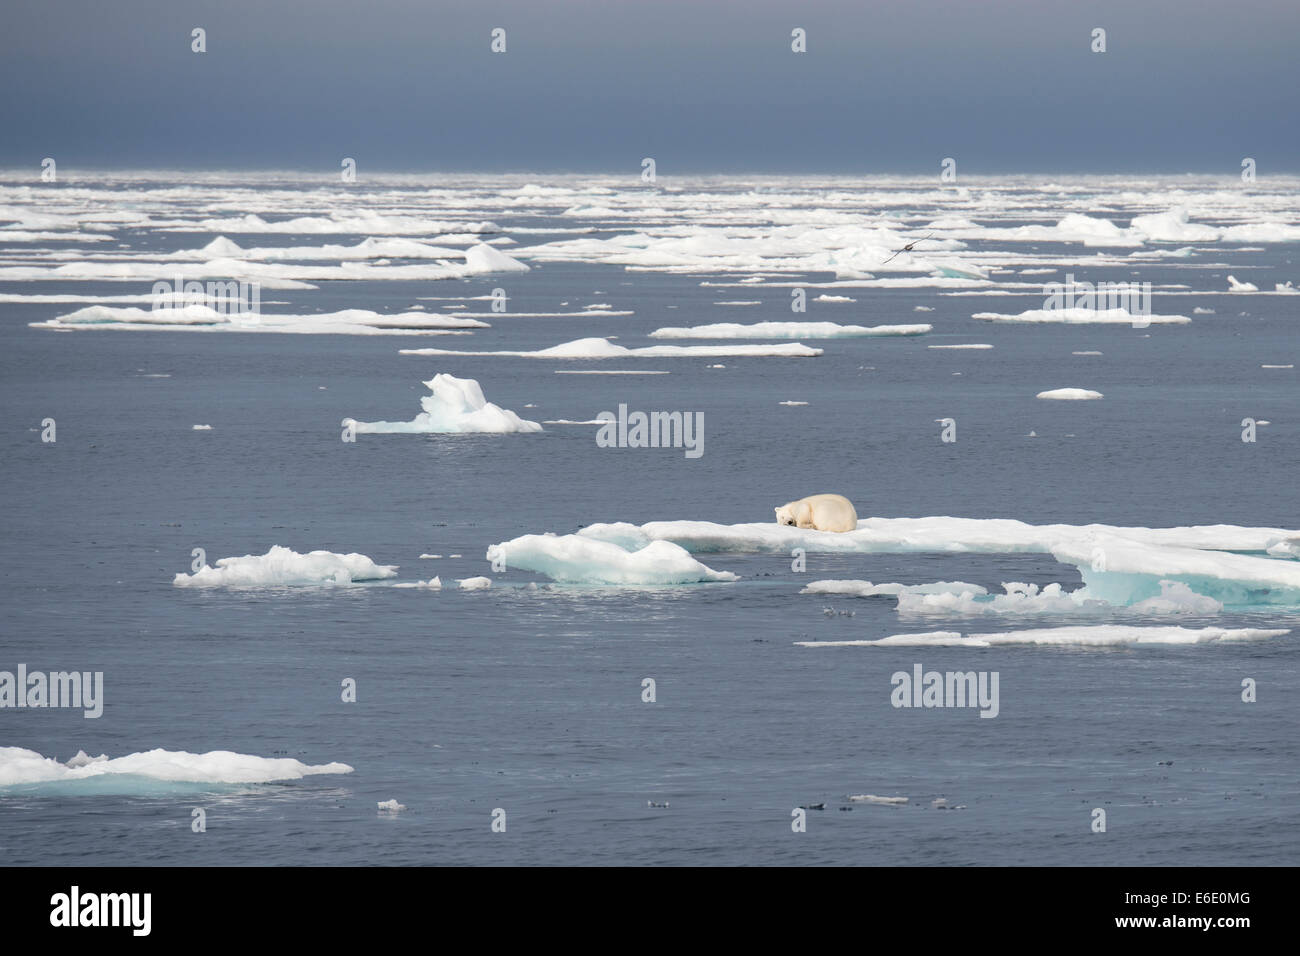 Male Polar Bear, Ursus maritimus, sleeping on an iceberg, Baffin Island, Canadian Arctic. Stock Photo